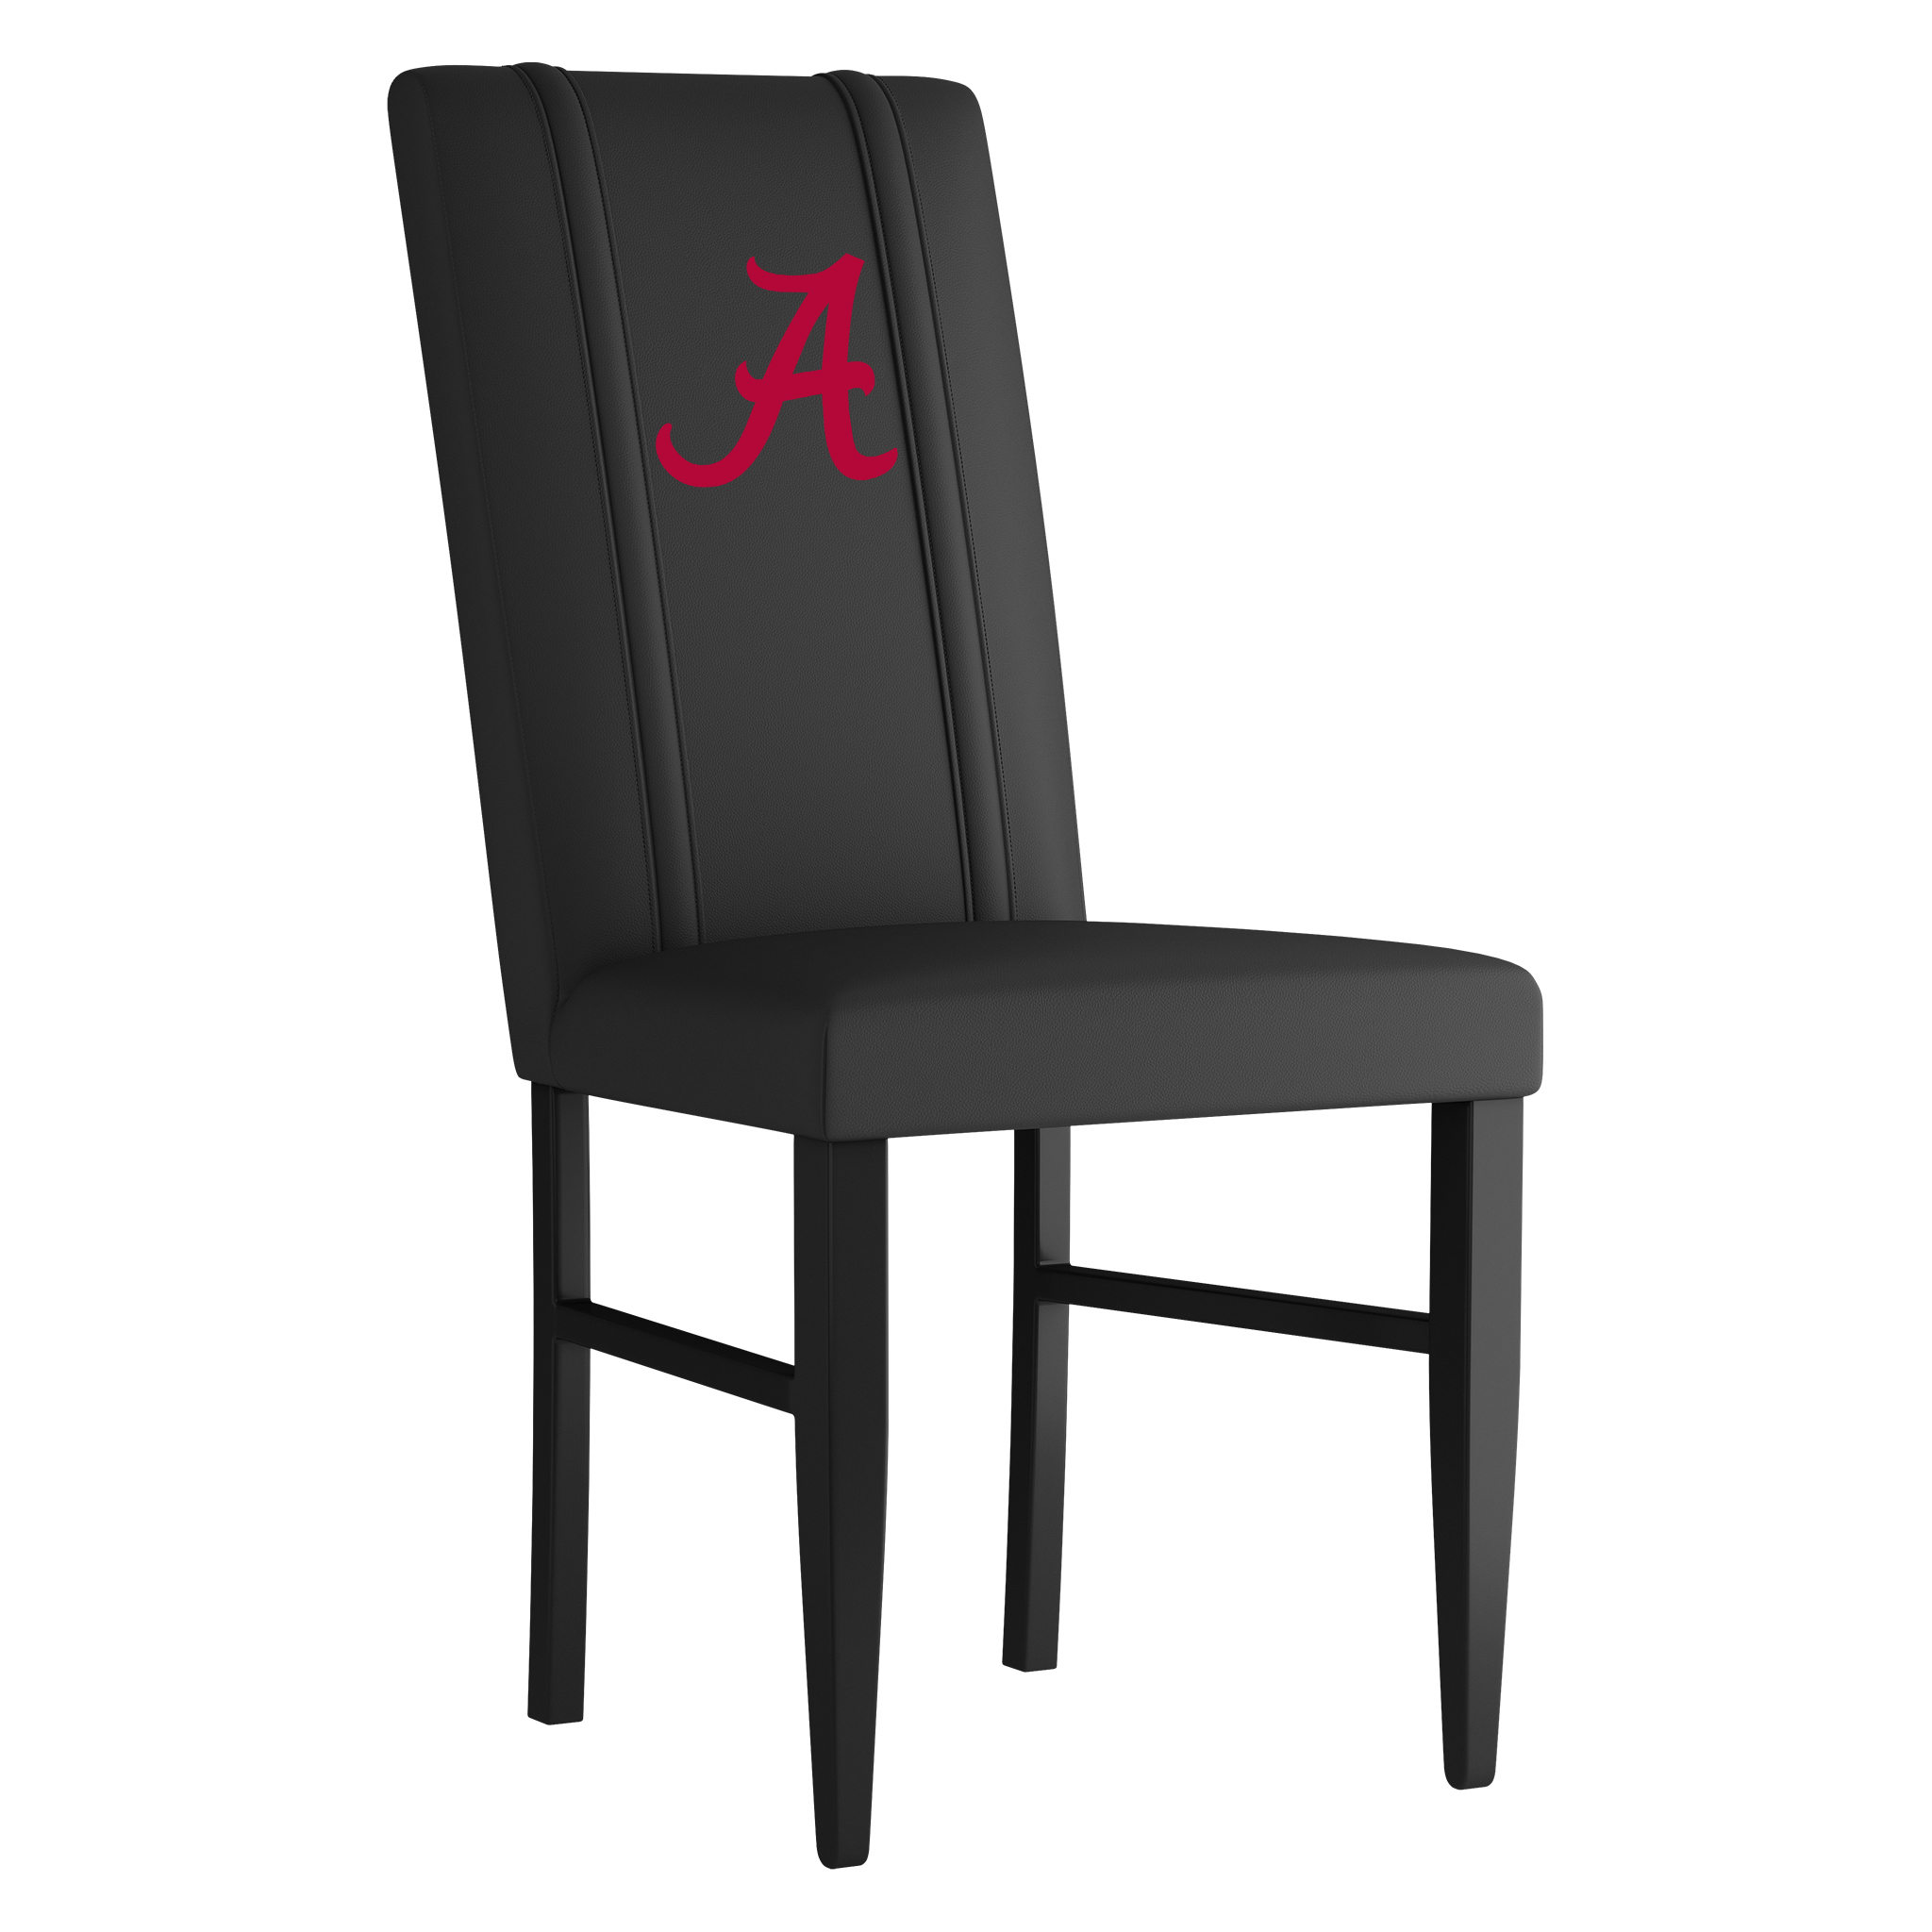 Alabama Crimson Tide Side Chair 2000 With Alabama Crimson Tide Red A Logo